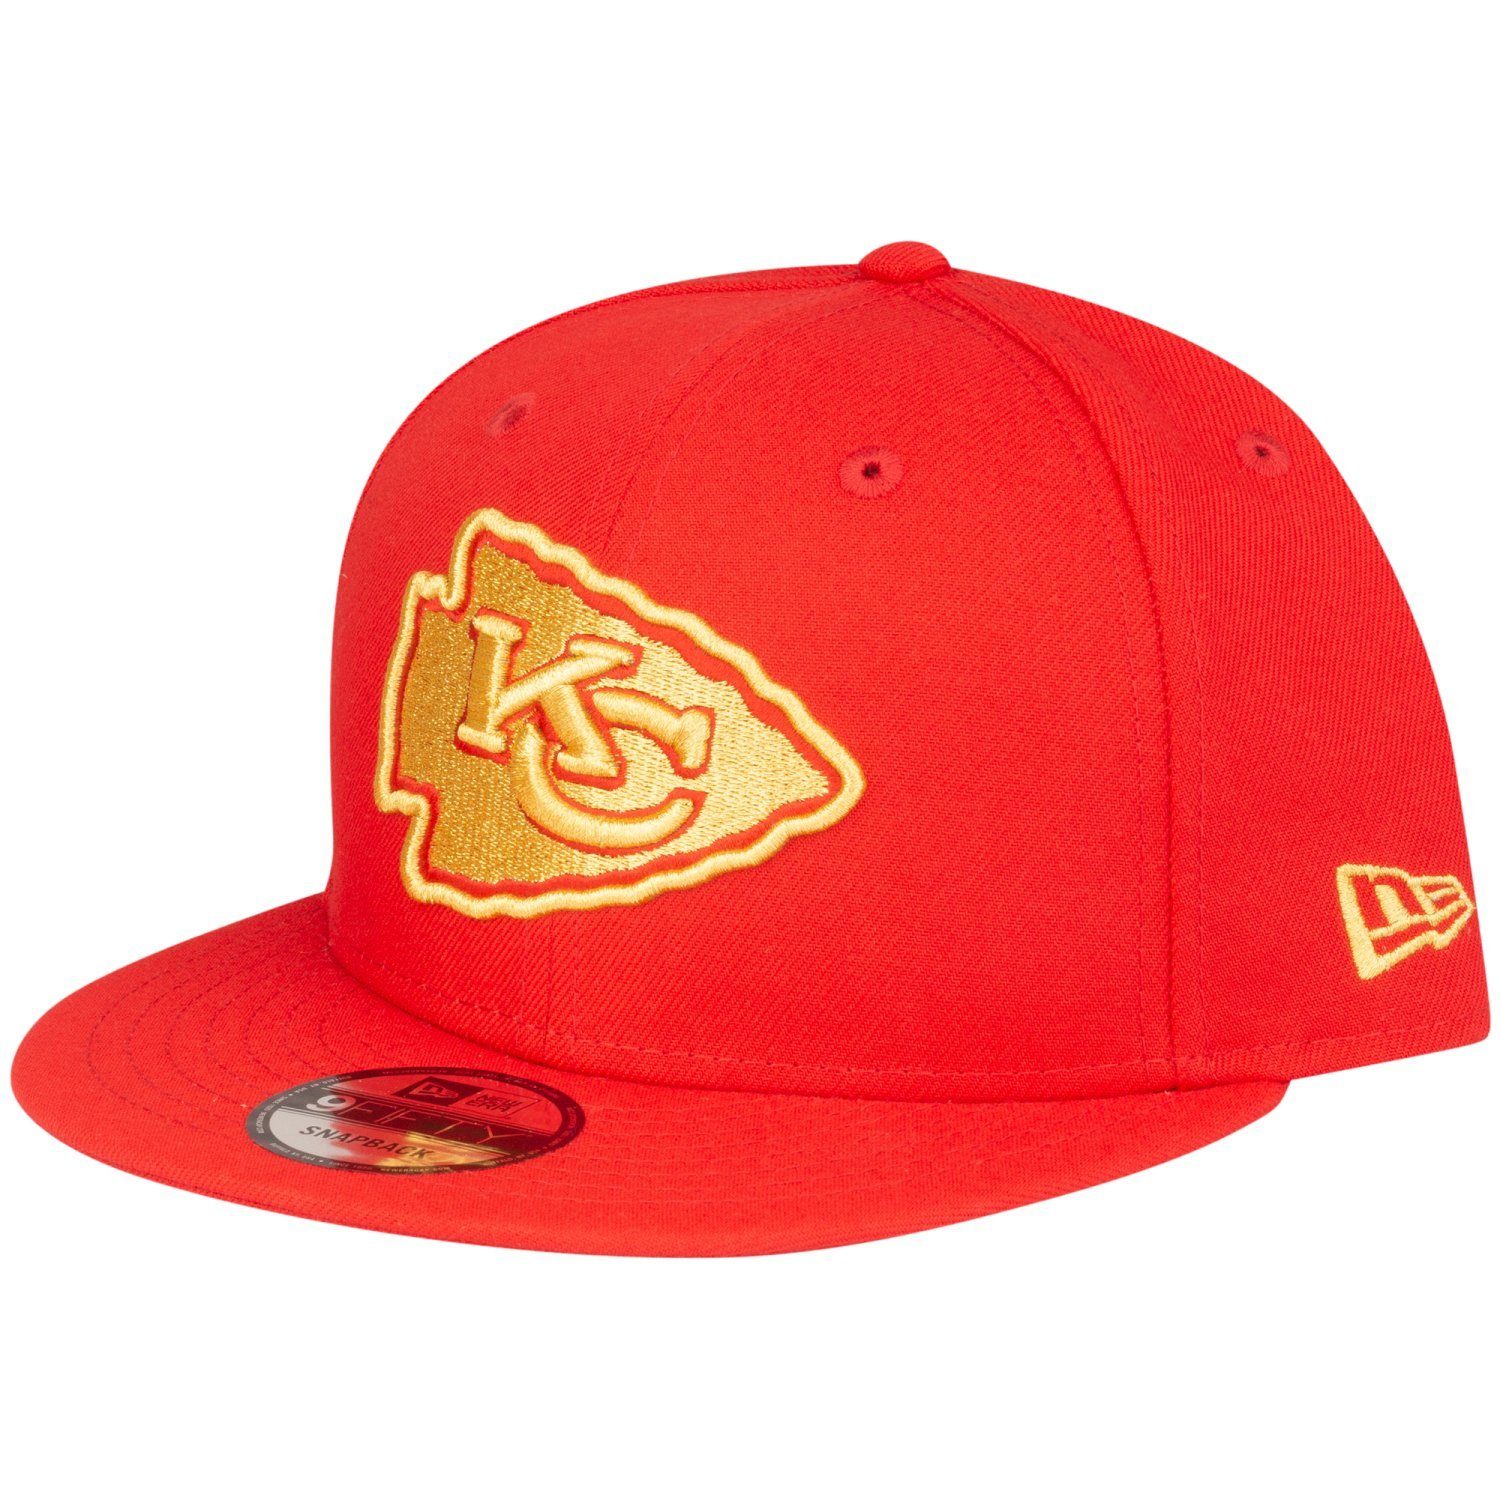 New Era Snapback Cap 9Fifty Kansas City Chiefs red gold